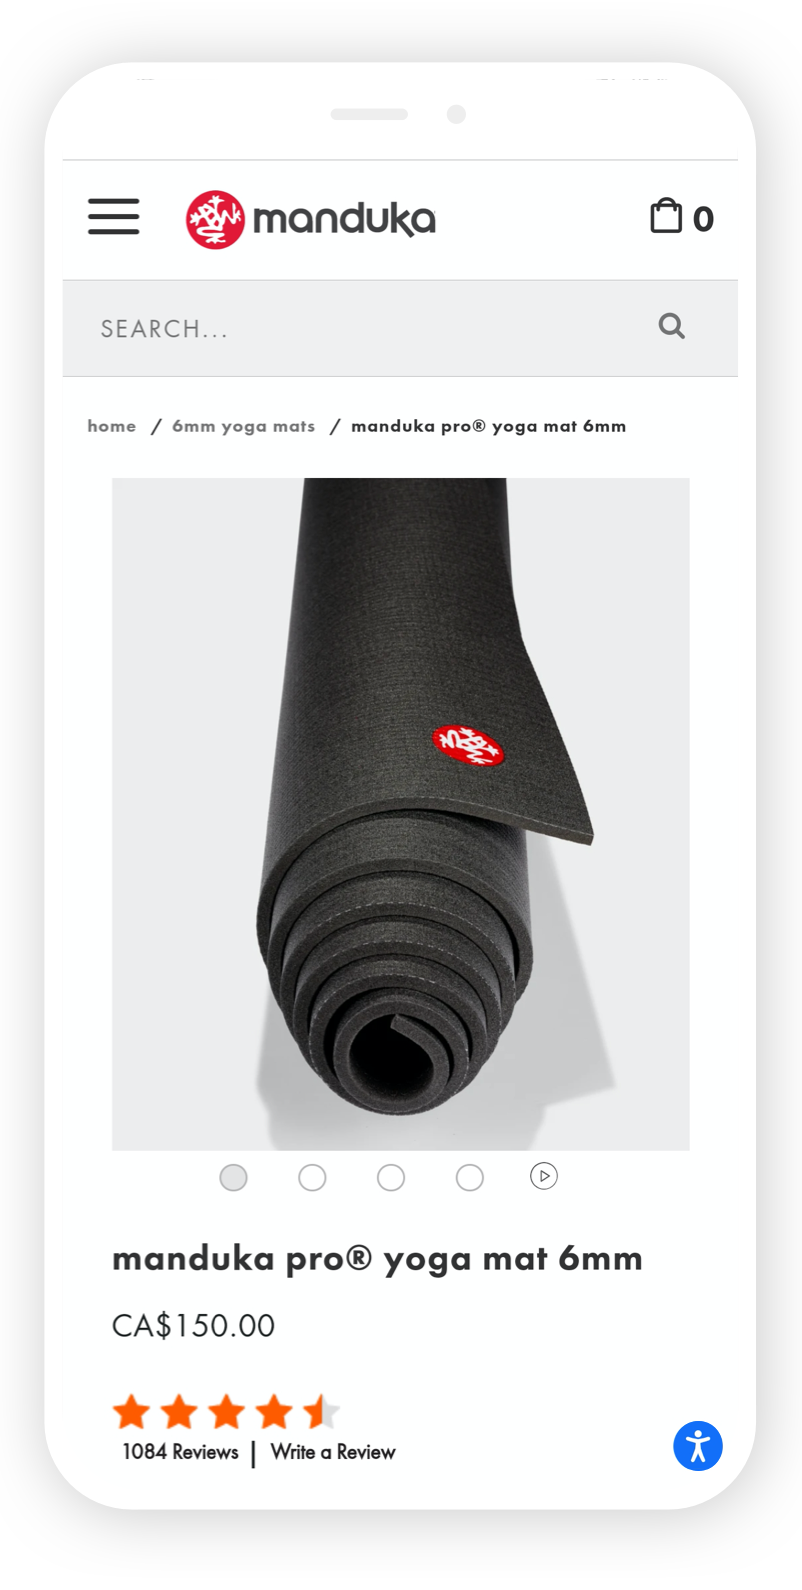 Manduka mobile app with yoga moda product detail displayed